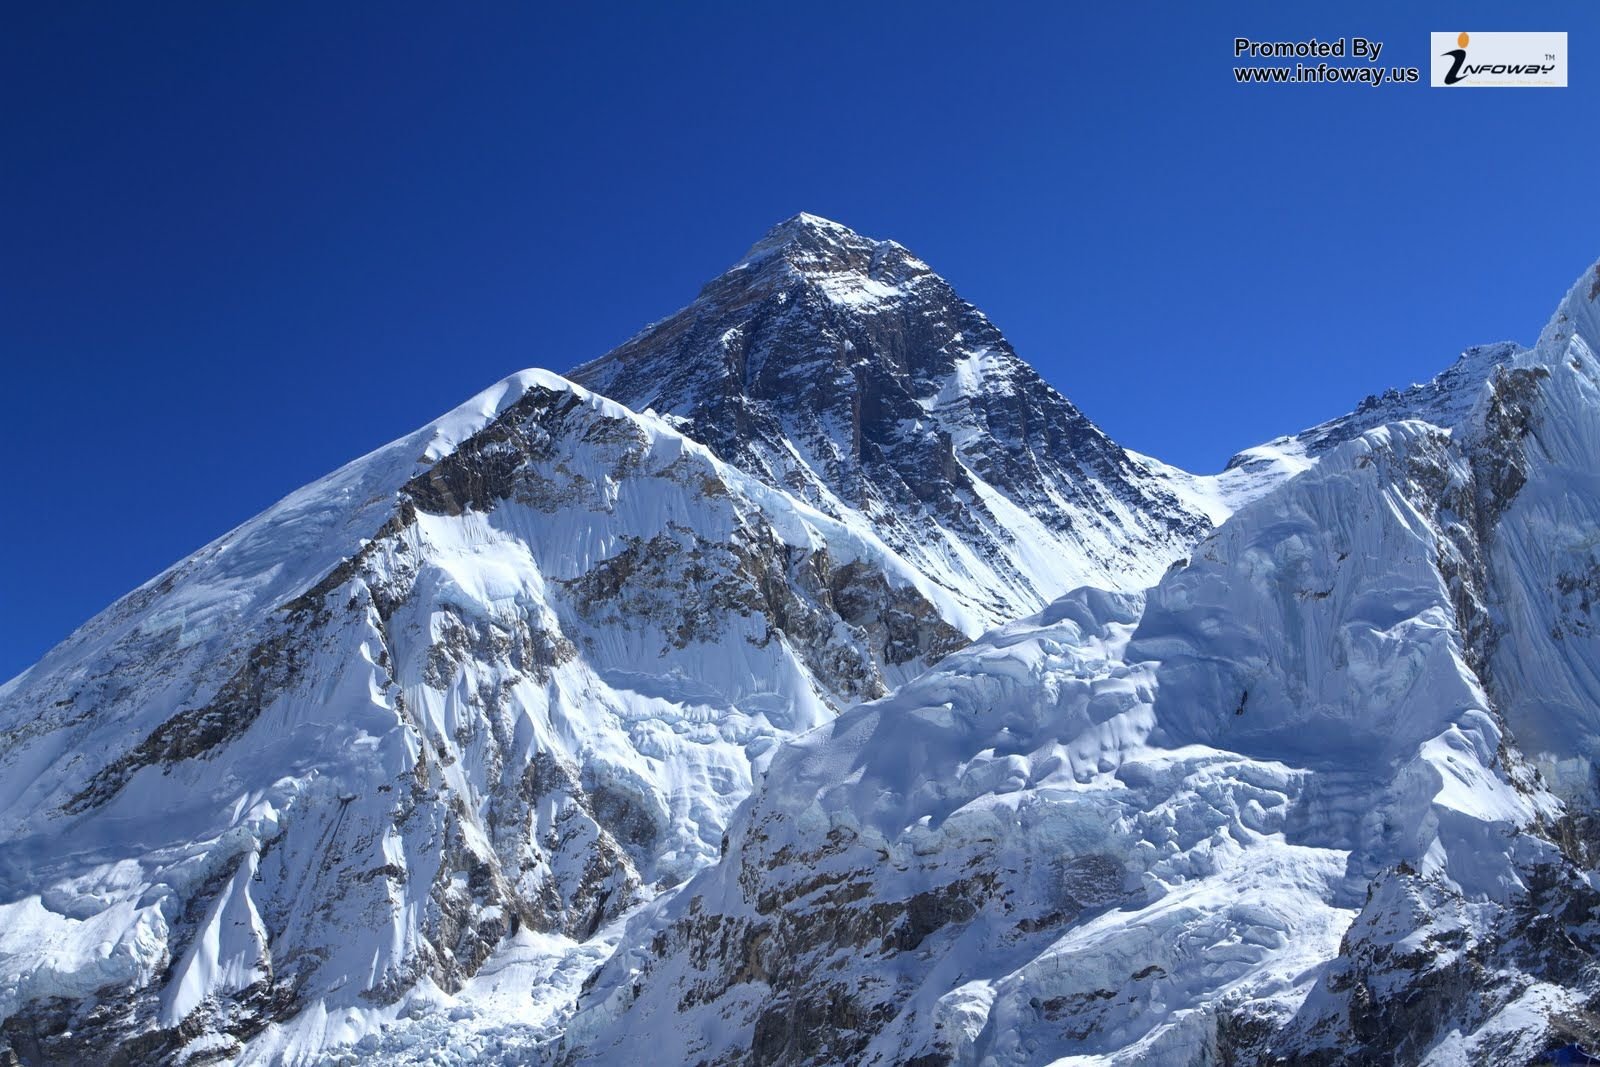 Free download Mountain Everest Wallpaper Photo 127 of 172 phombocom [1600x1067] for your Desktop, Mobile & Tablet. Explore Everest Wallpaper. Mount Everest HD Wallpaper, Mt Everest Wallpaper Background